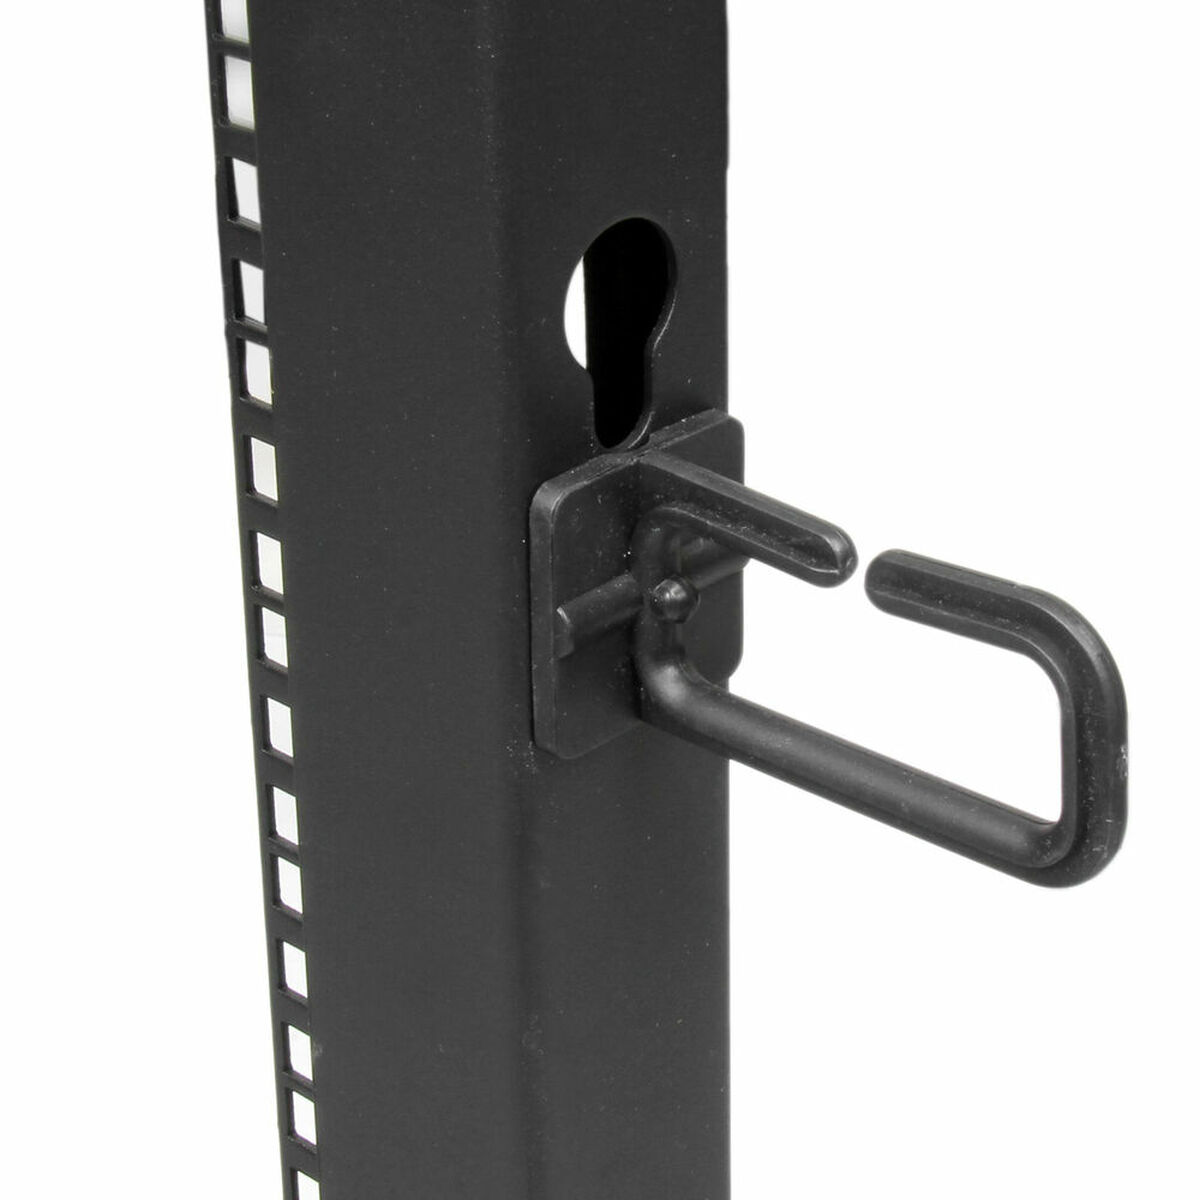 Wall-mounted Rack Cabinet Startech 4POSTRACK12U        